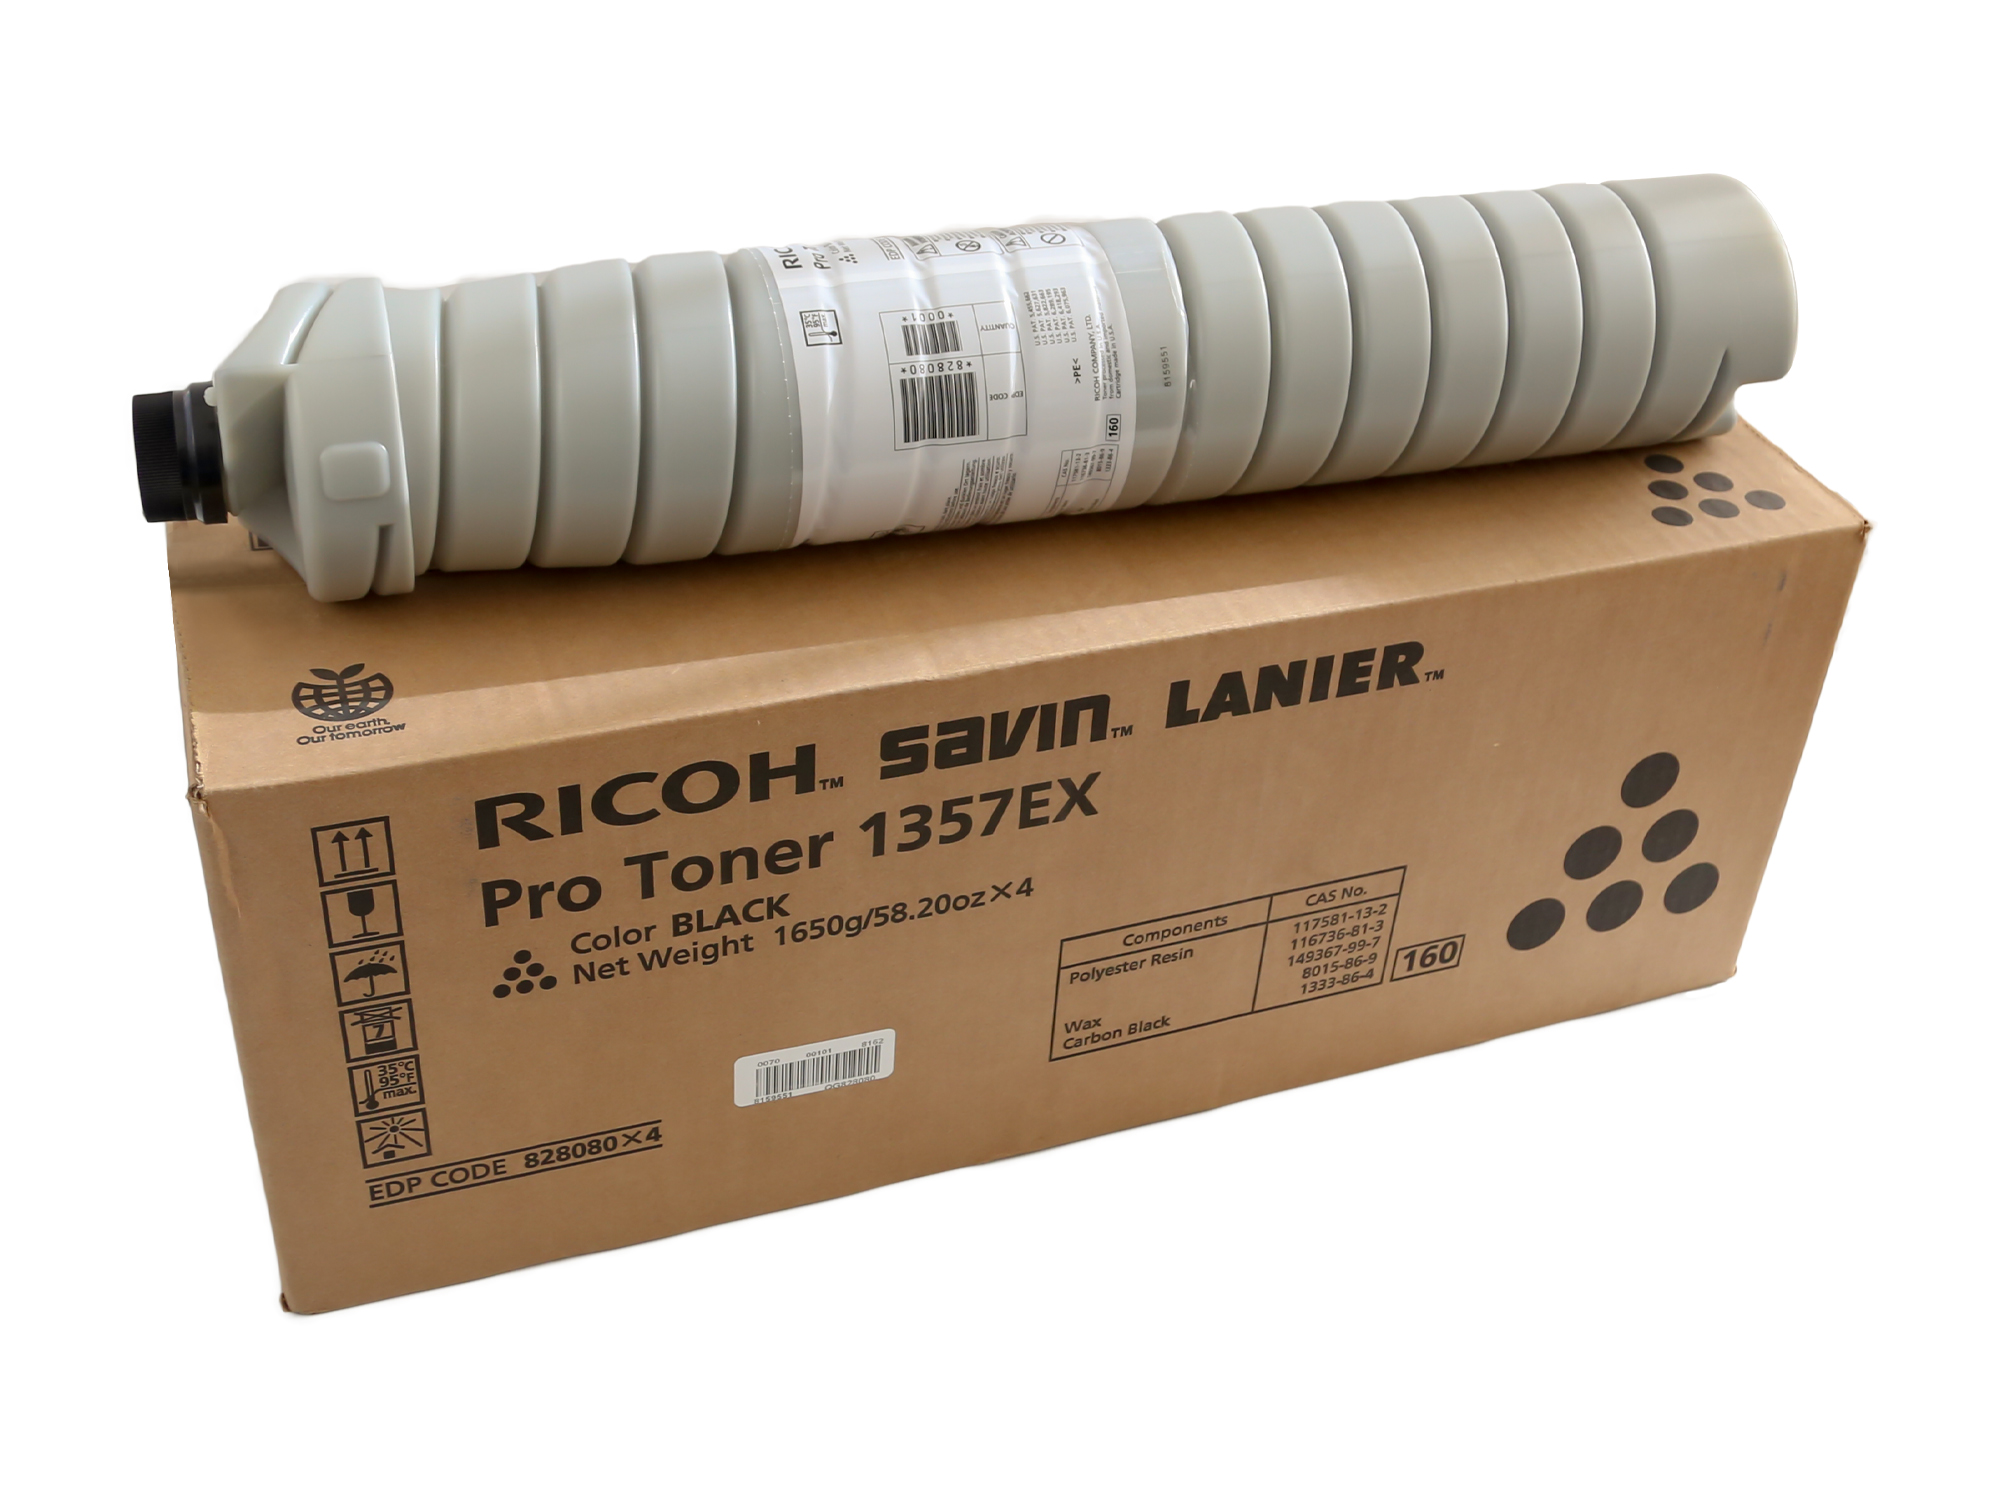 828080 Toner Cartridge (OEM) for Ricoh Pro 907